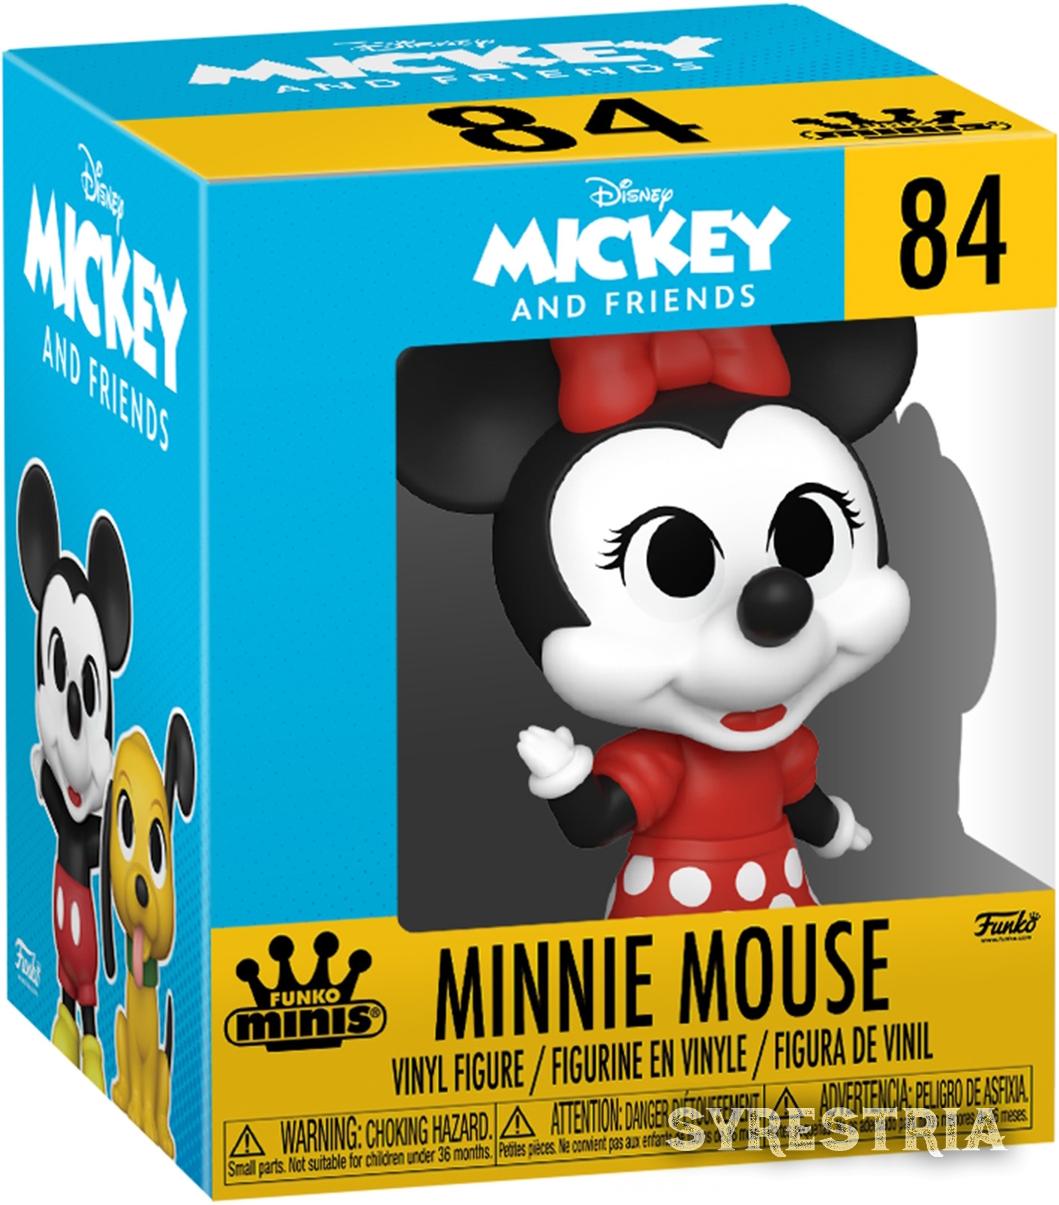 Disney Mickey and Frinds - Minnie Mouse 84 - Funko Minis Vynl Figuren